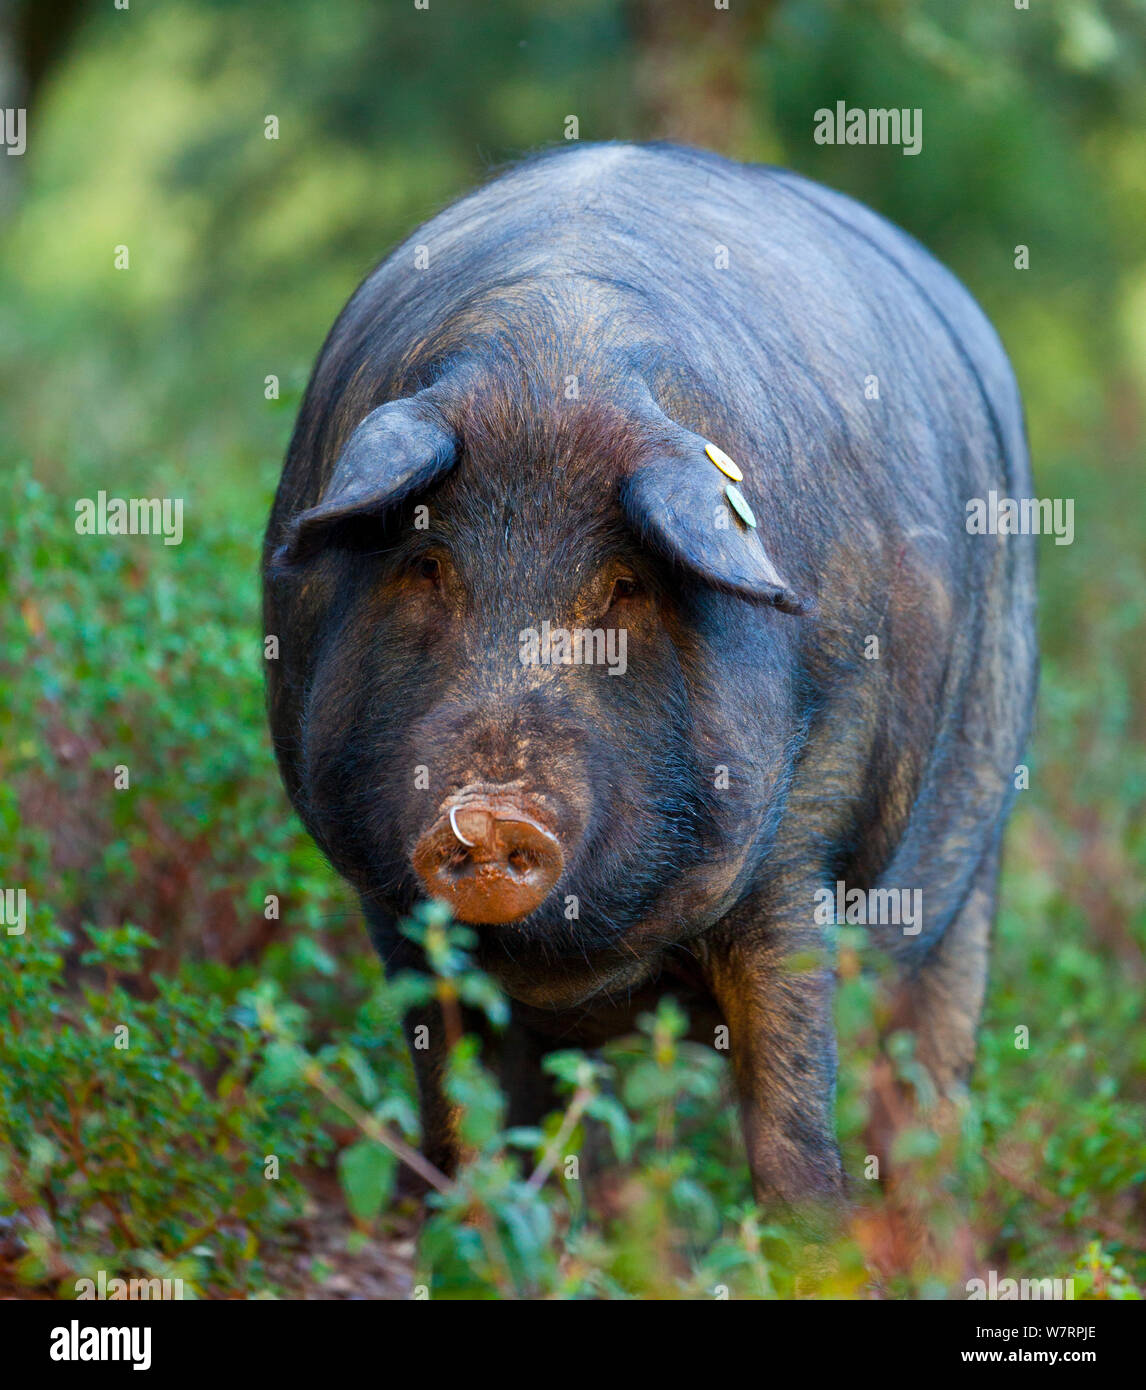 Iberischen Schwein, Naturpark Sierra de Aracena, Huelva, Andalusien, Spanien, Europa. Rasse verwendet Iberico Schinken/Jamon Iberico produzieren Stockfoto